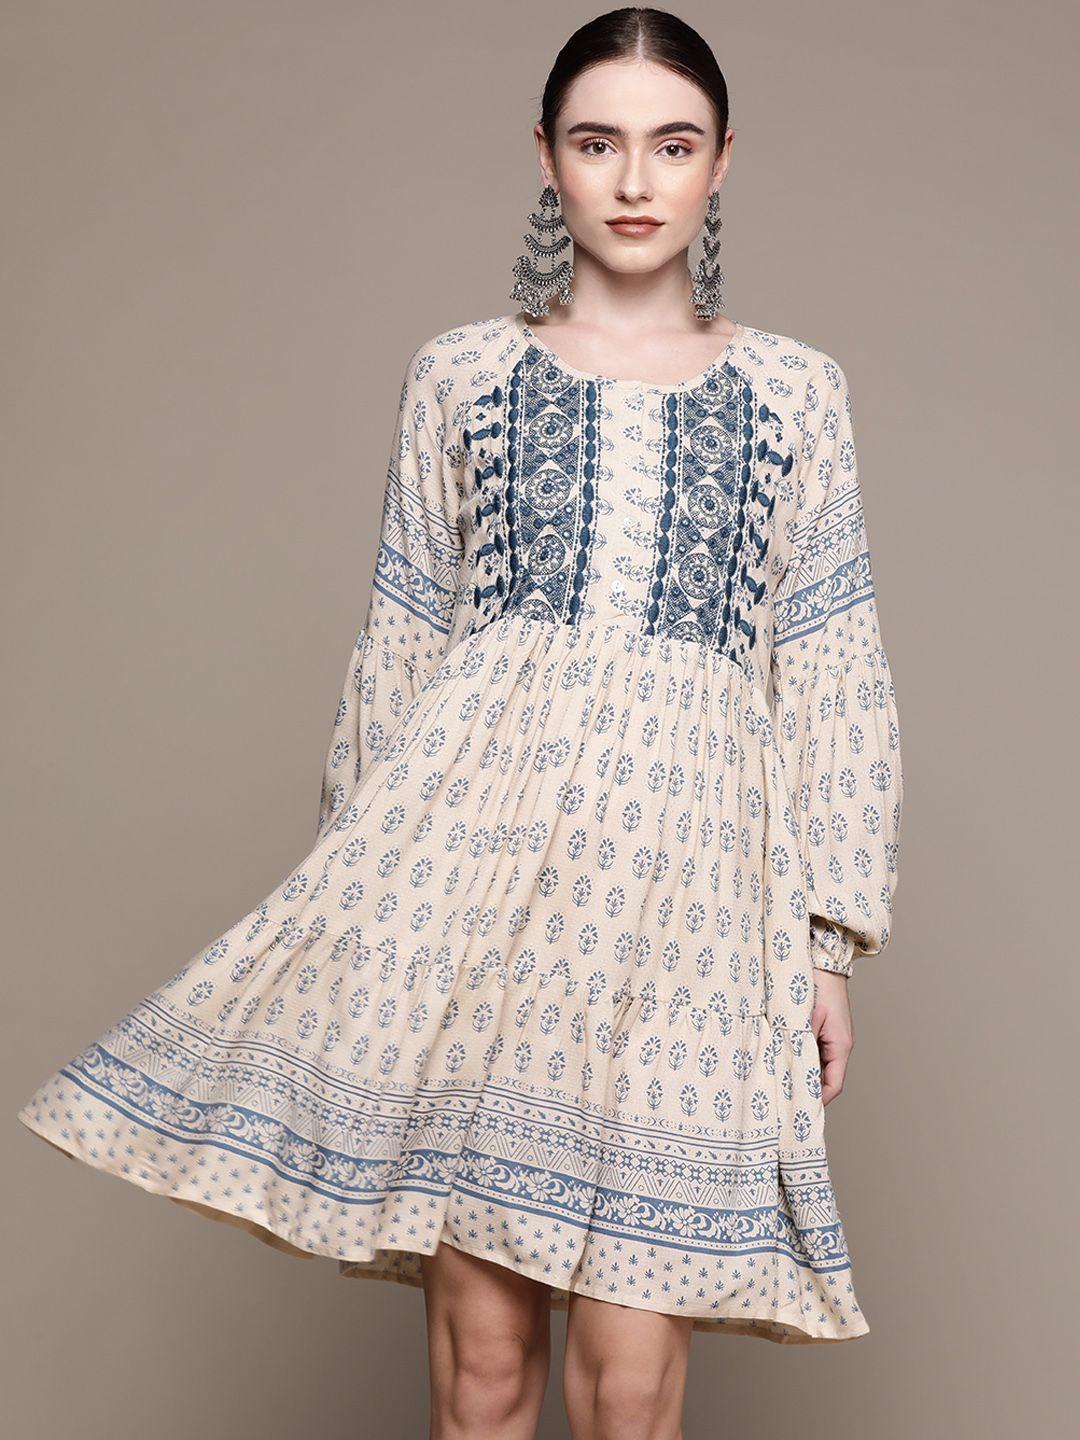 ishin-beige-&-navy-blue-ethnic-motifs-embroidered-ethnic-cotton-a-line-dress